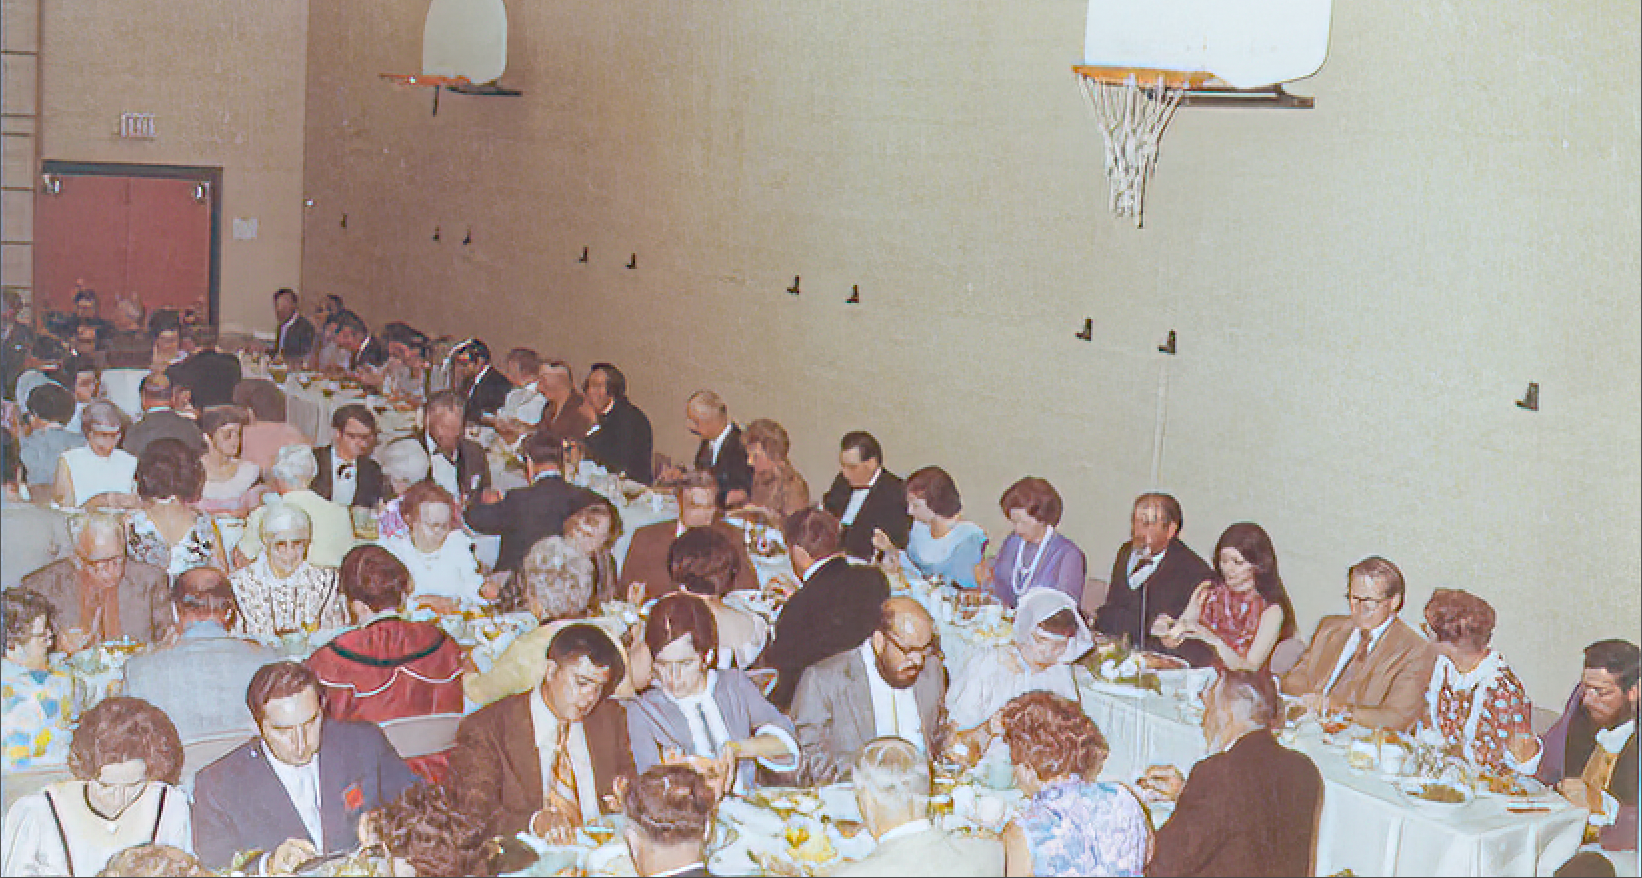 Anniversary banquet in the Public School